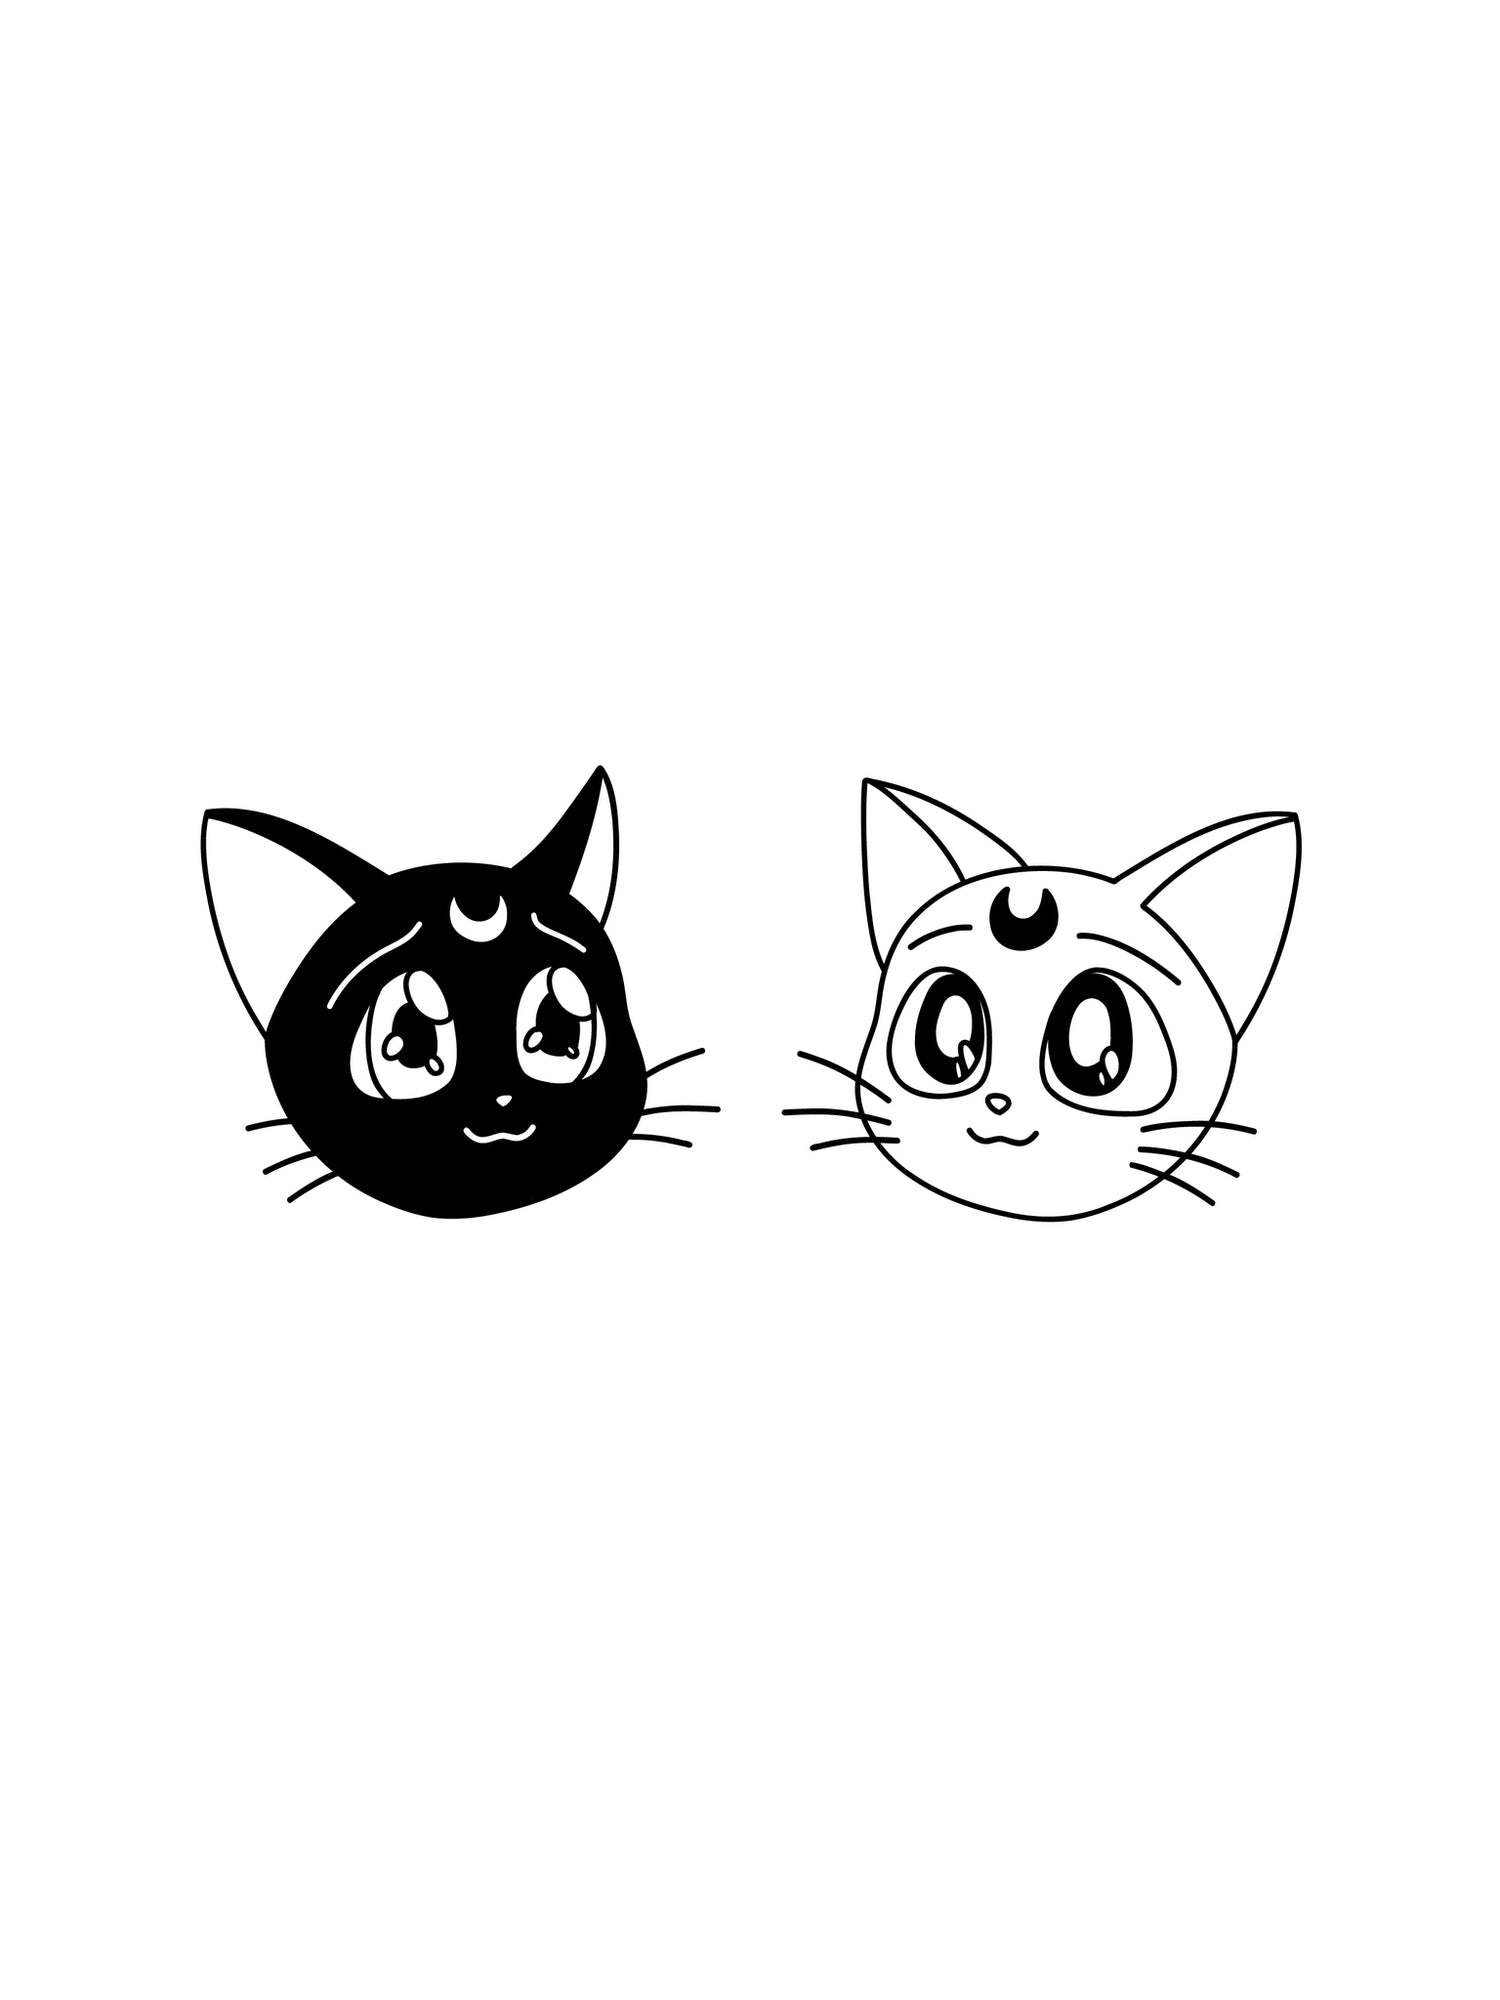 moon cats pair